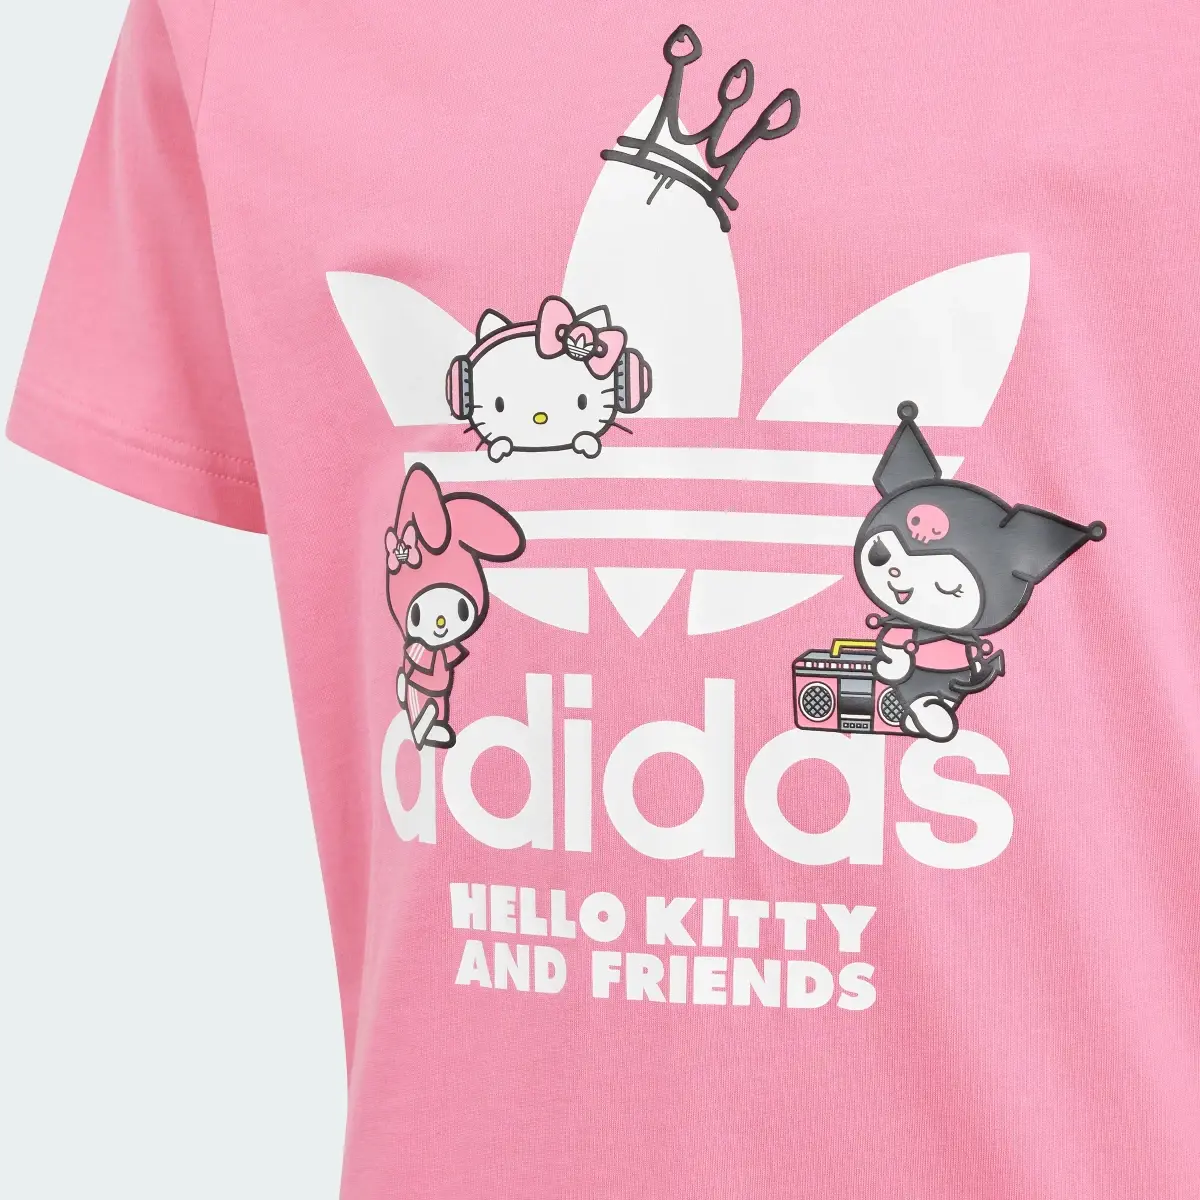 Adidas Originals x Hello Kitty Tee. 3